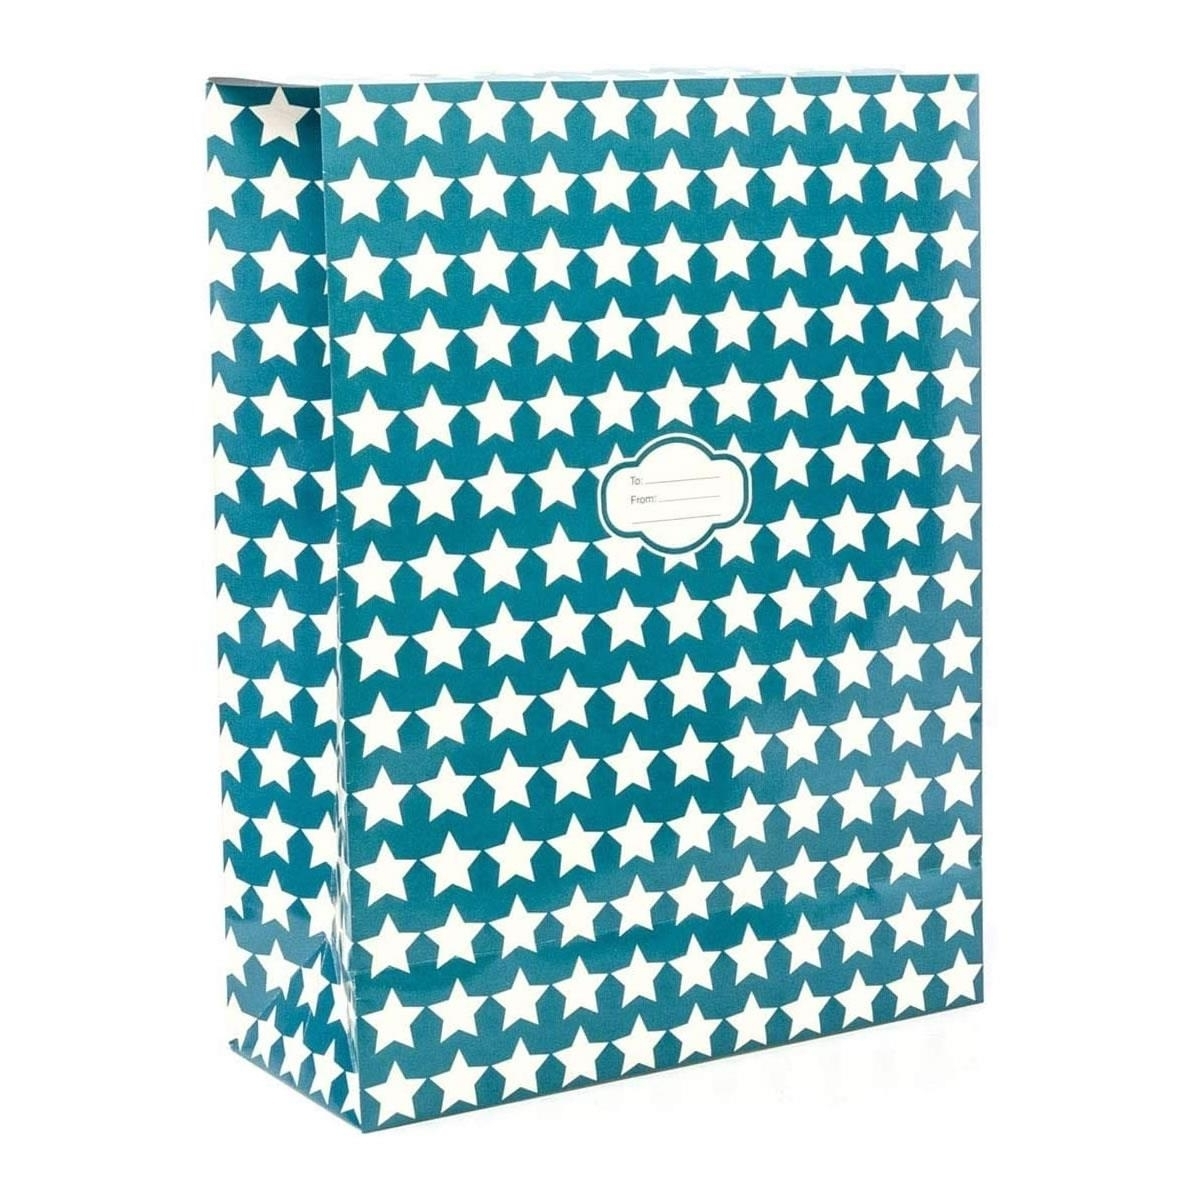 Pressie Pouch Peel & Seal Gift Bag Blue Stars 12pk Medium No-Wrap Present